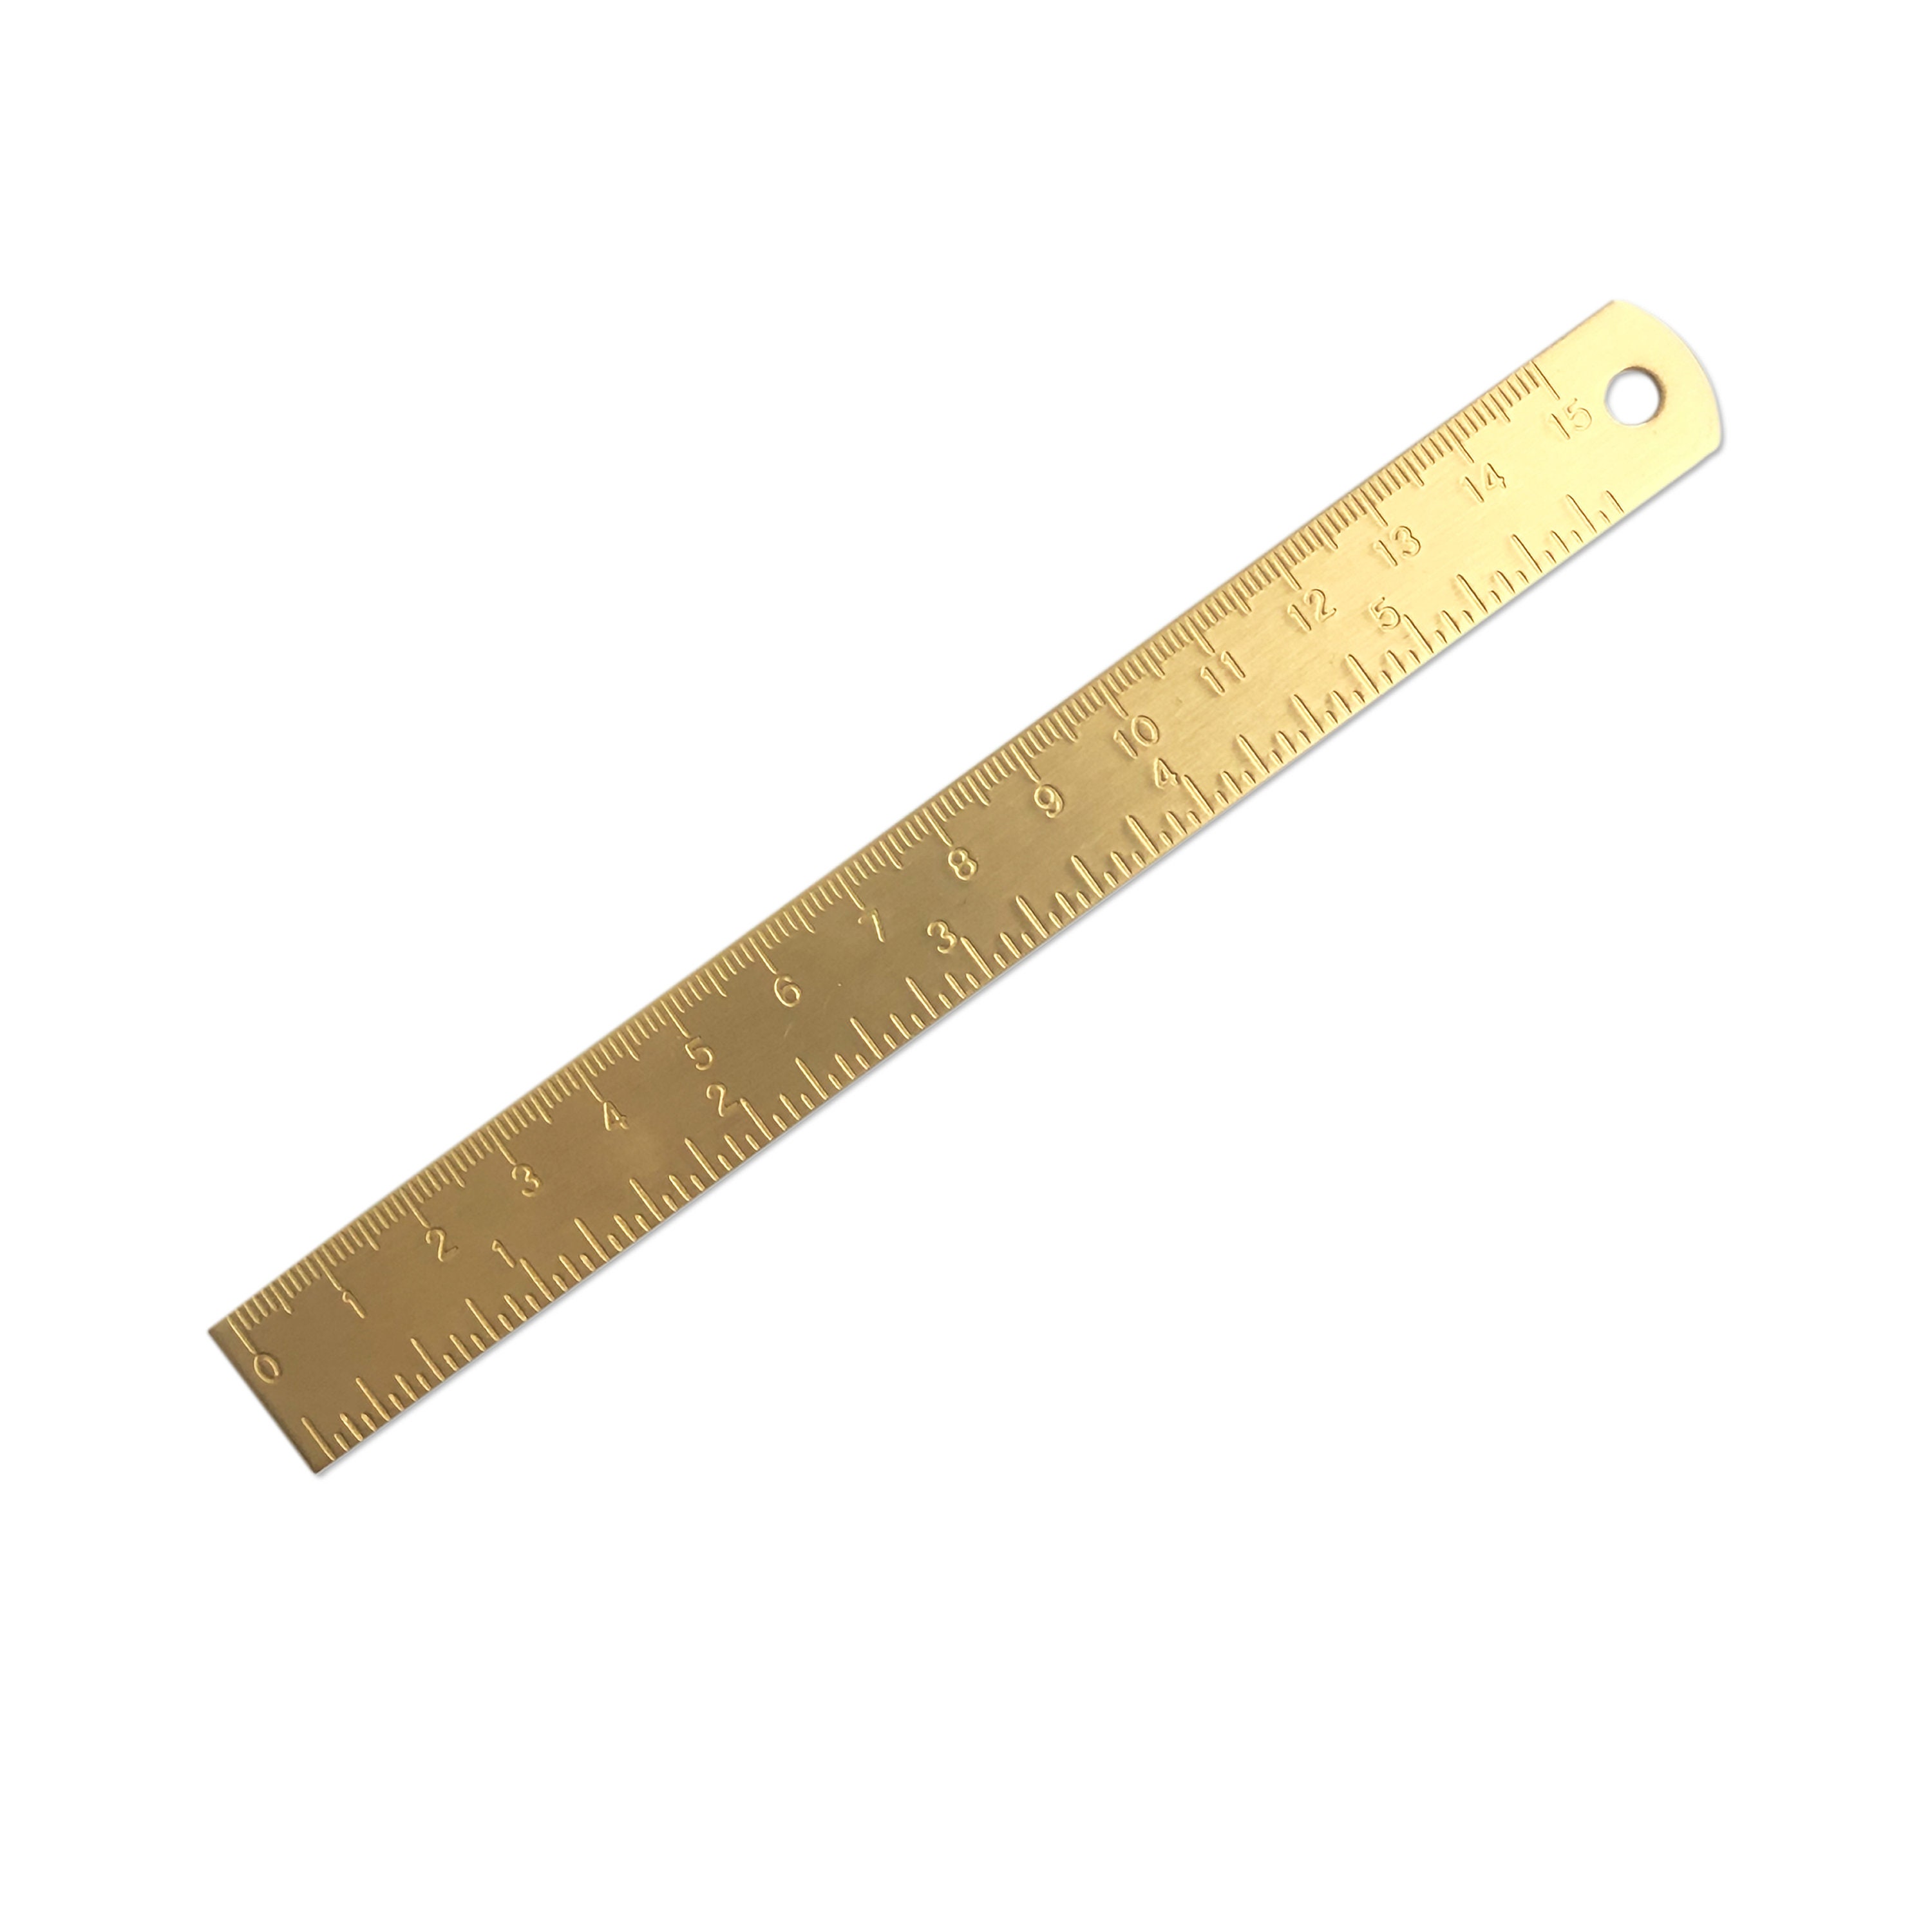 Règle en métal doré 15 cm